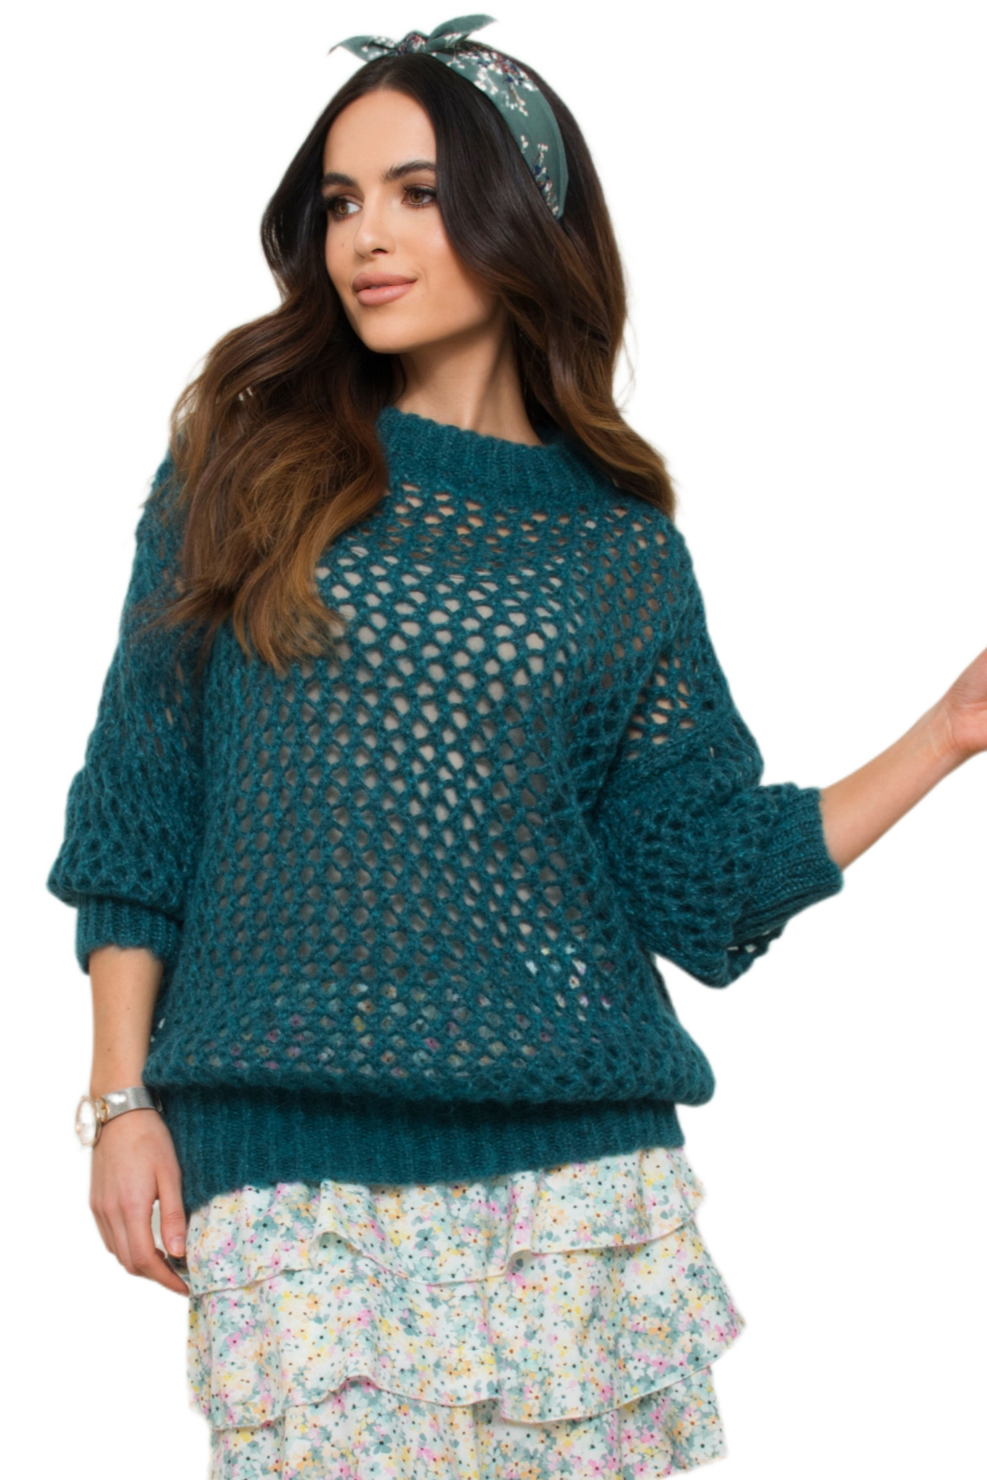 Kamea Woman's Sweater Malika K.21.617.18